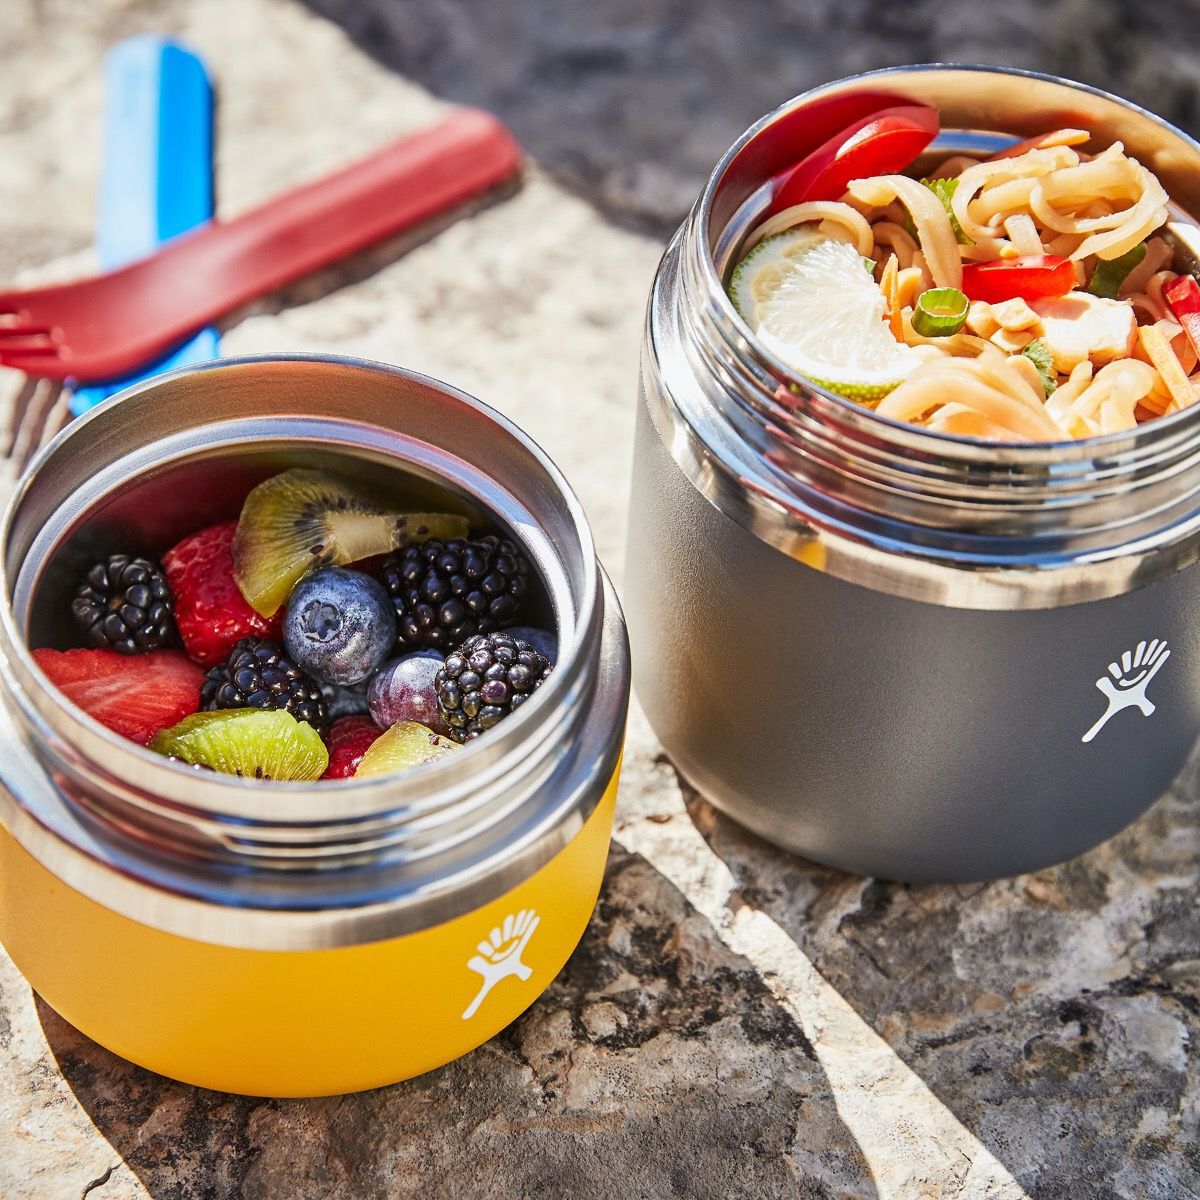 Hydro Flask 12oz Insulated Food Jar - Hike & Camp